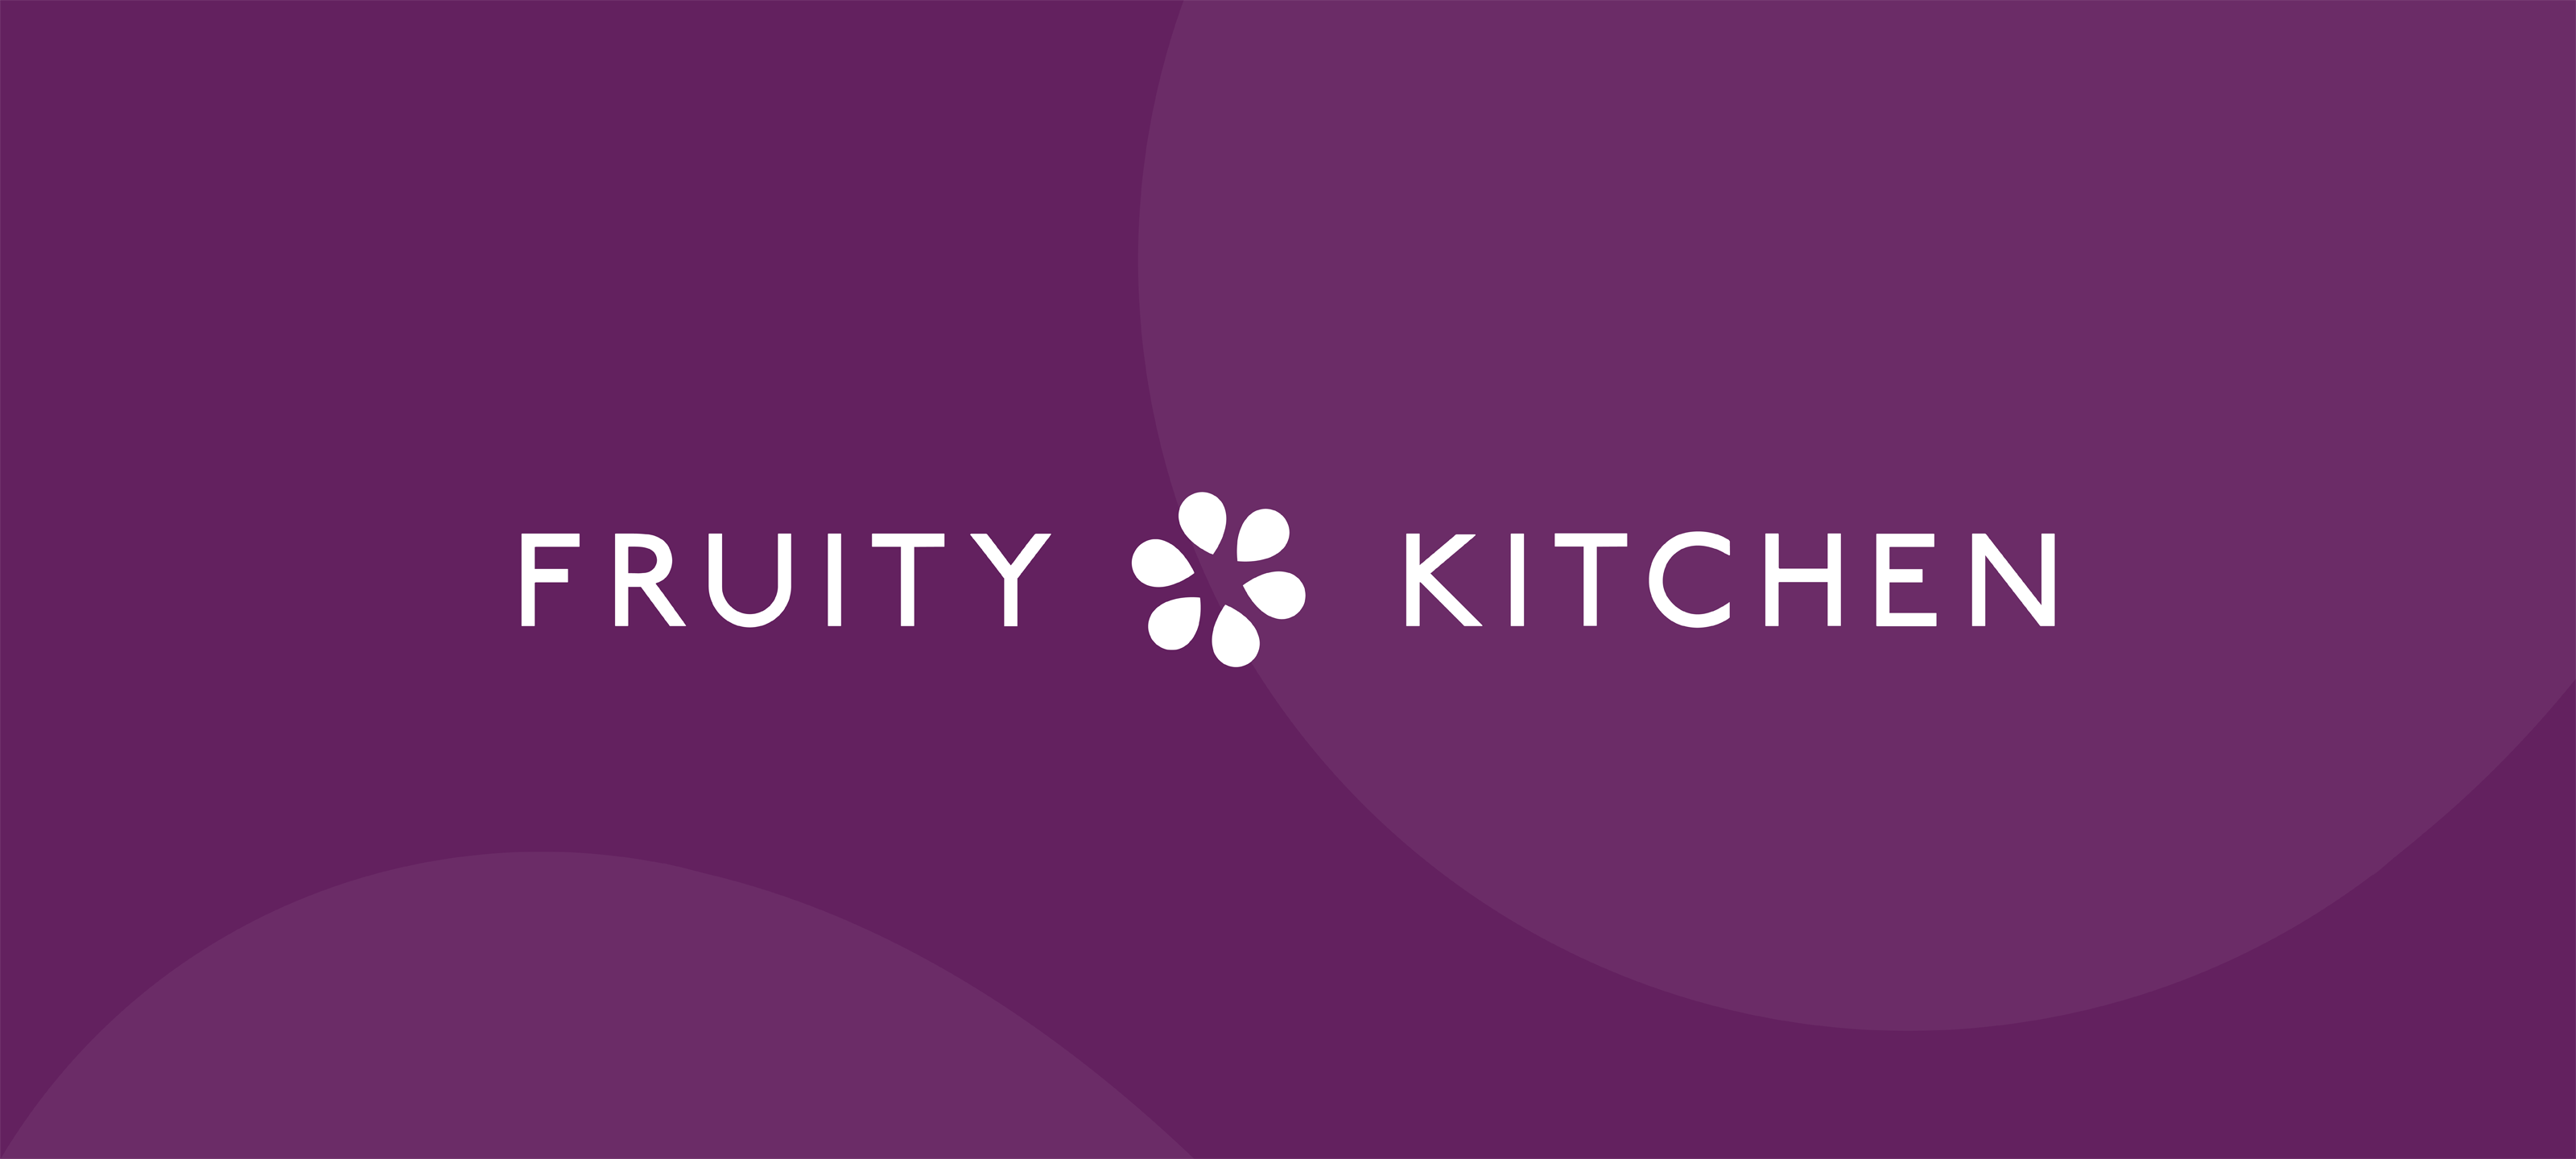 Fruity Kitchen Logo & Branding